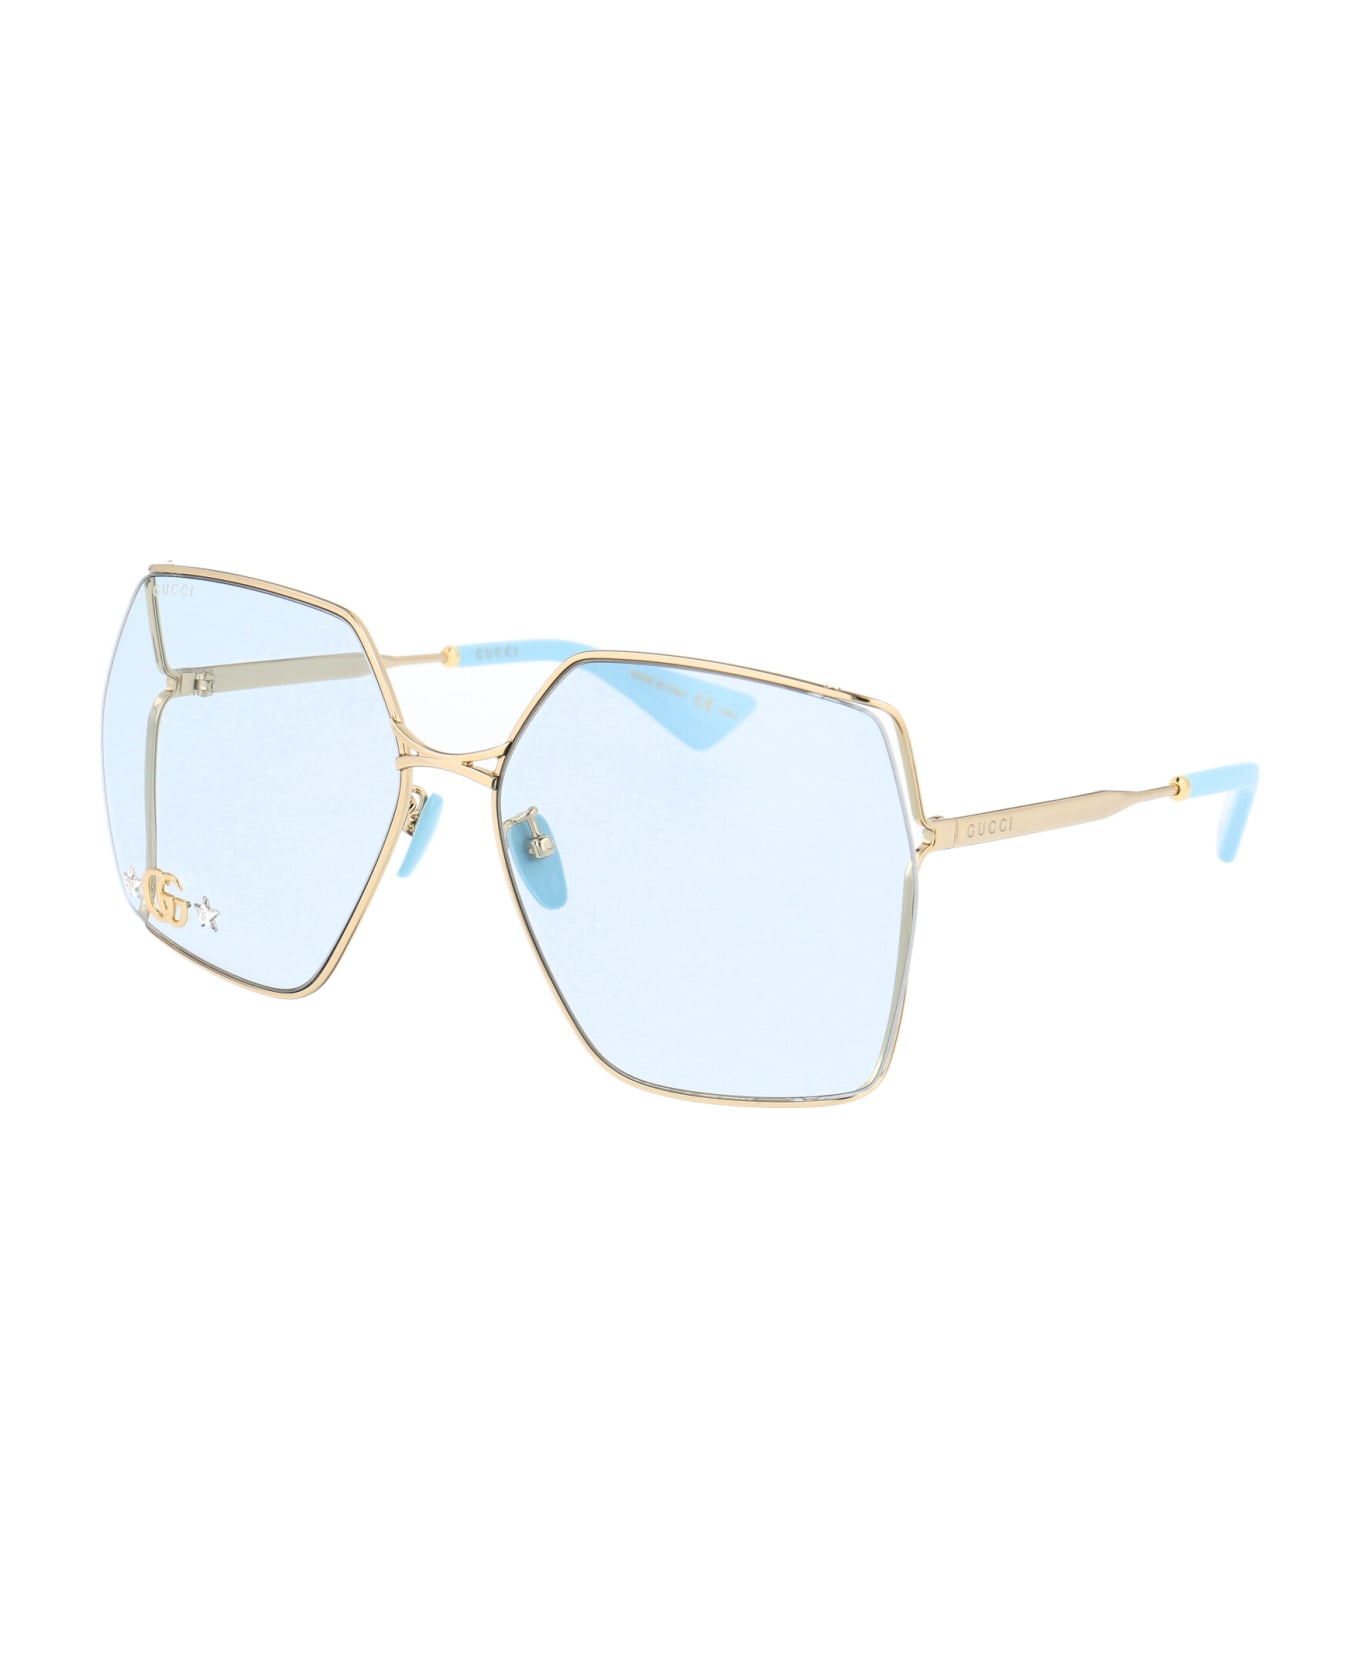 Gucci Eyewear Gg0817s Sunglasses - 004 s marled effect sunglasses